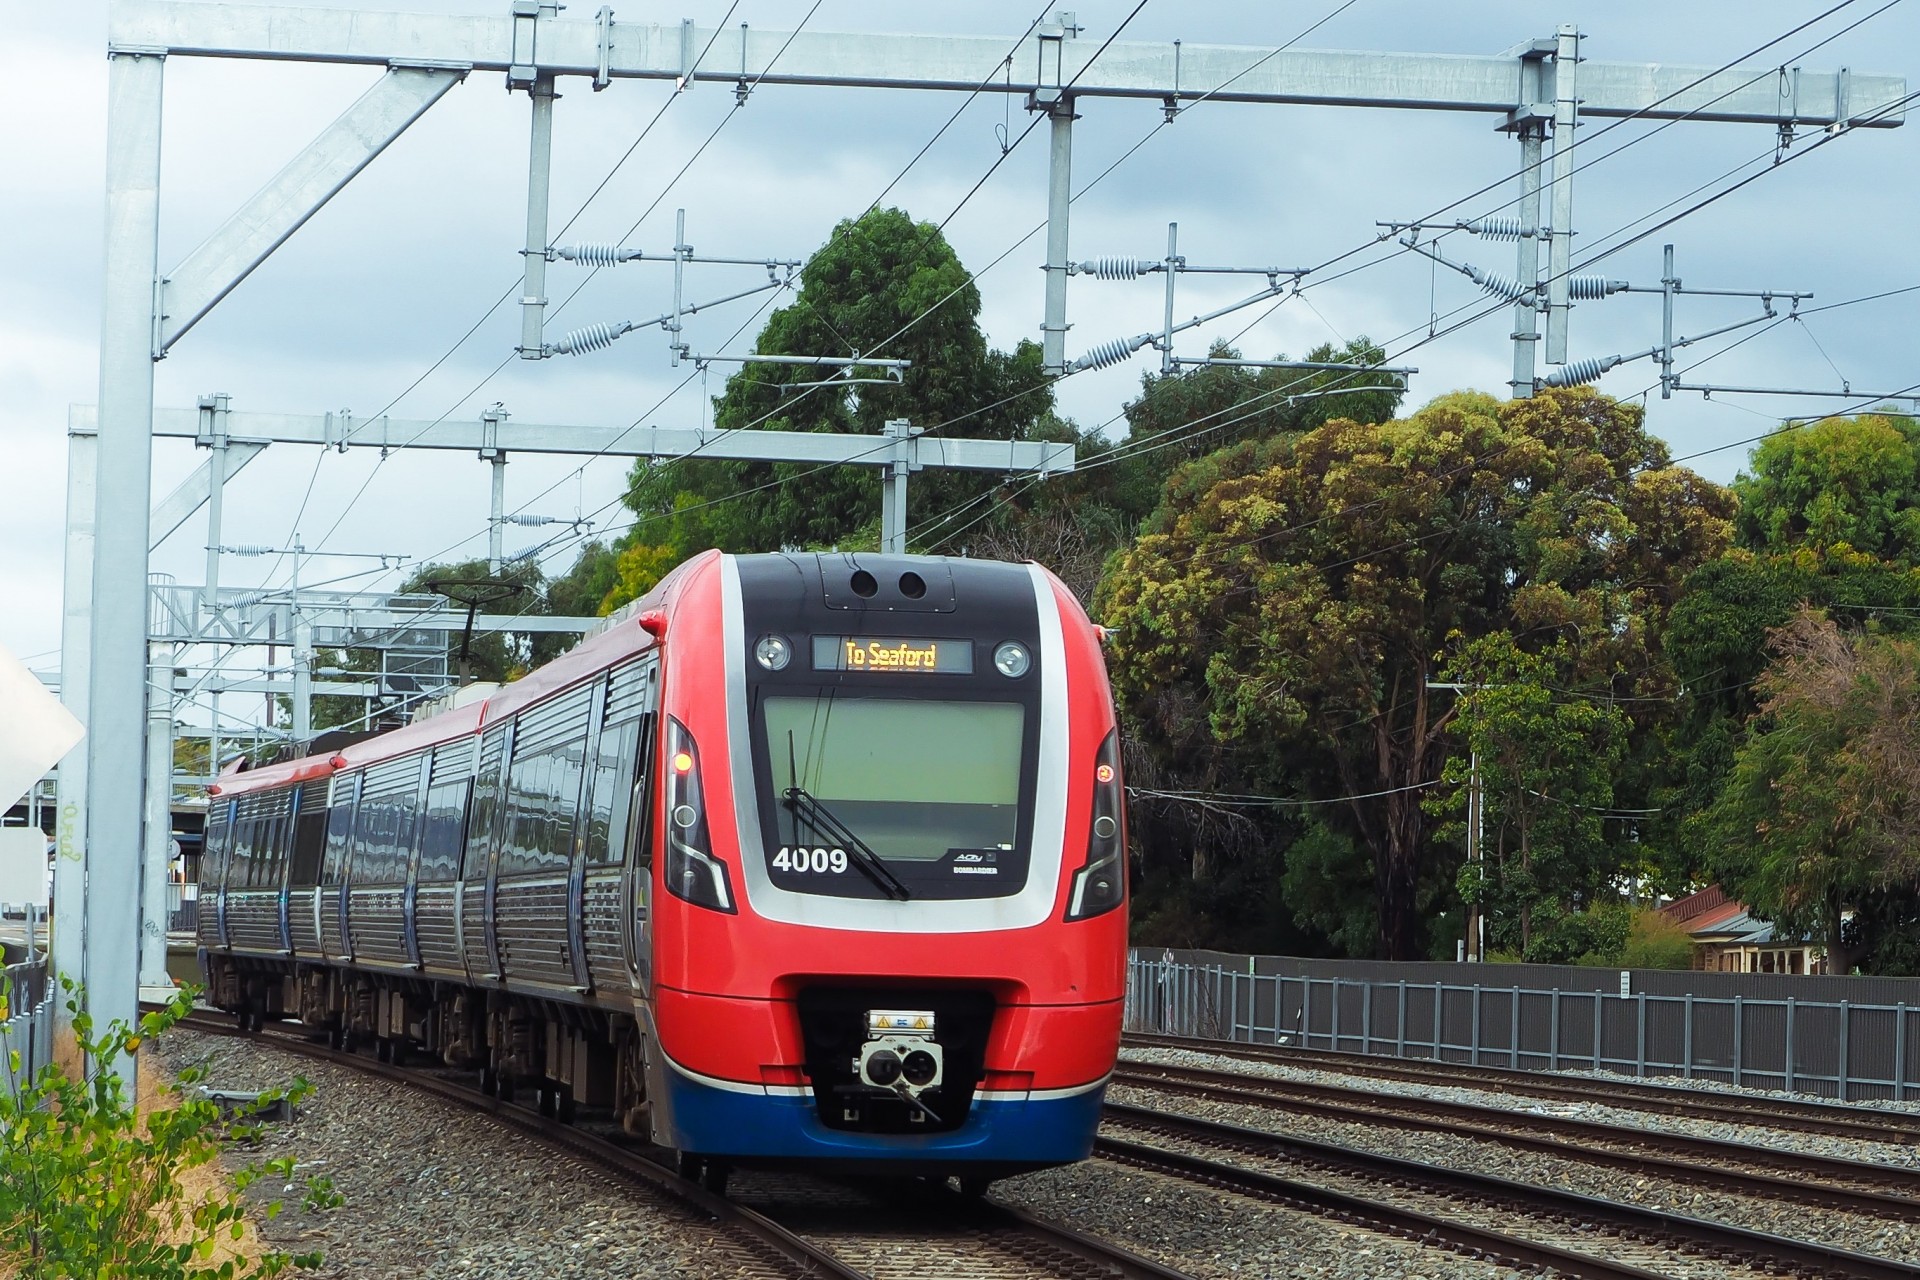 Adelaide billede 2 Electric train on tracks 3